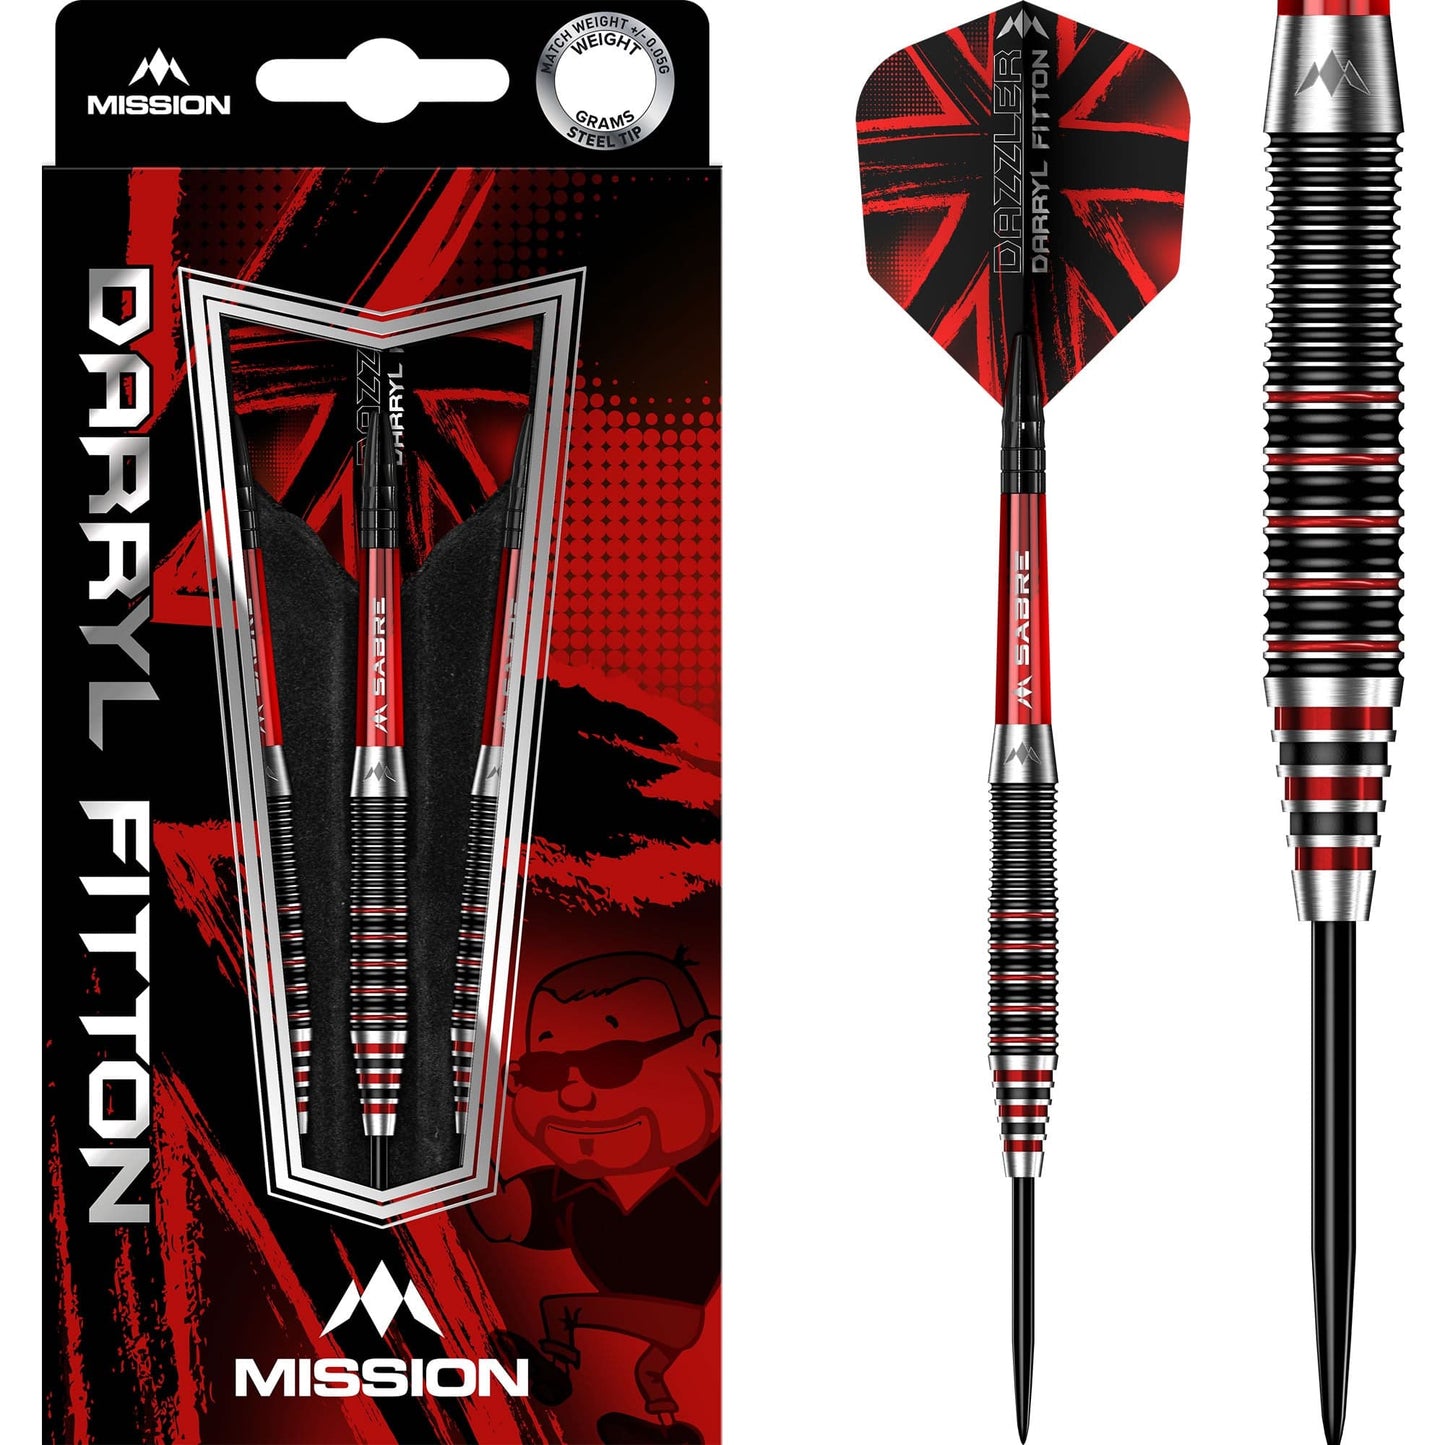 Mission Darryl Fitton Darts - Steel Tip - Electro Black & Red - The Dazzler 22g